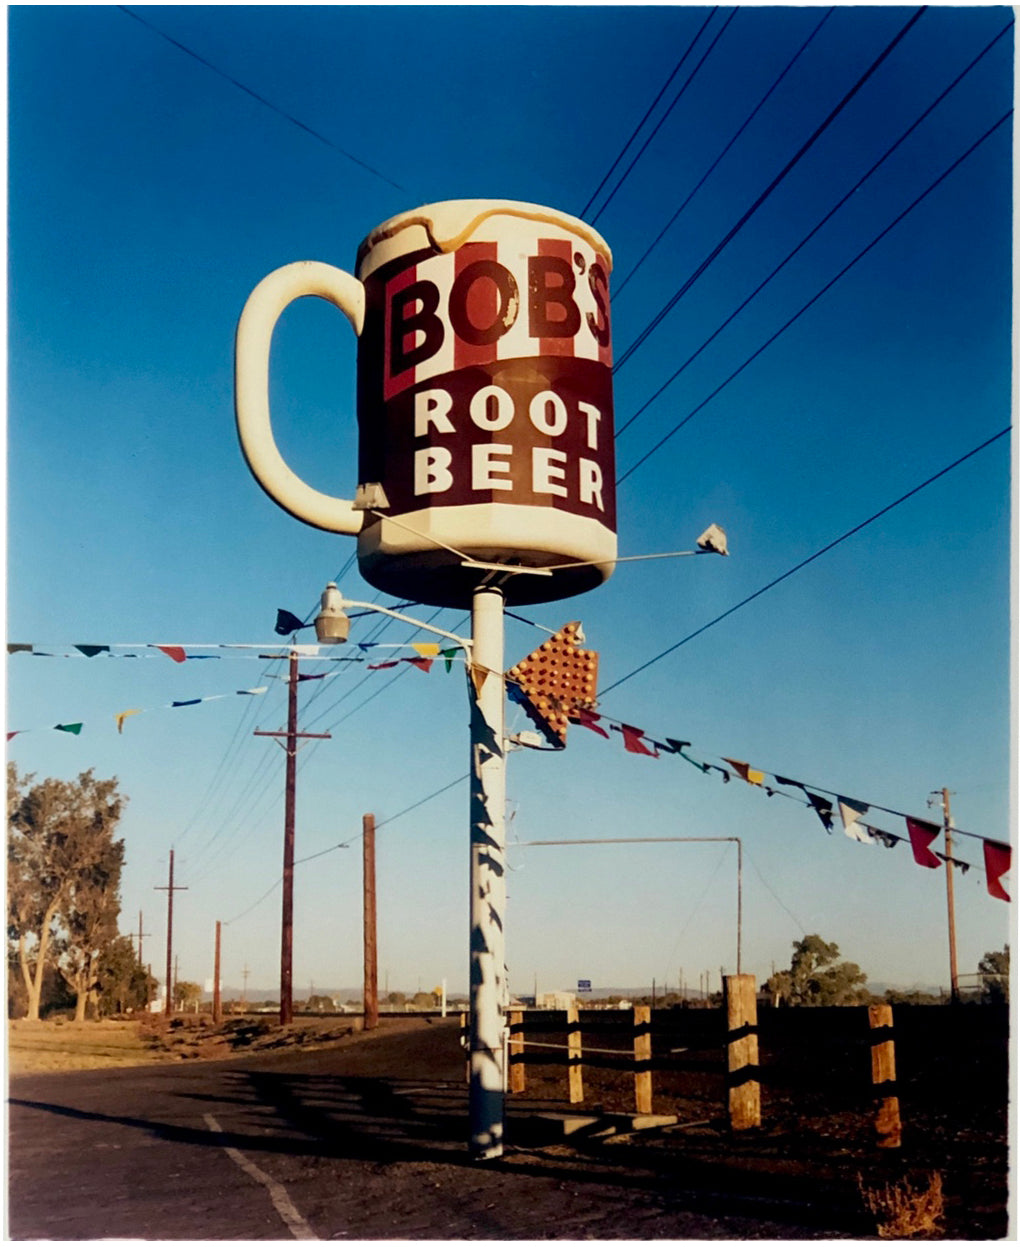 Bob's Root Beer, Fallon, Nevada, 2003